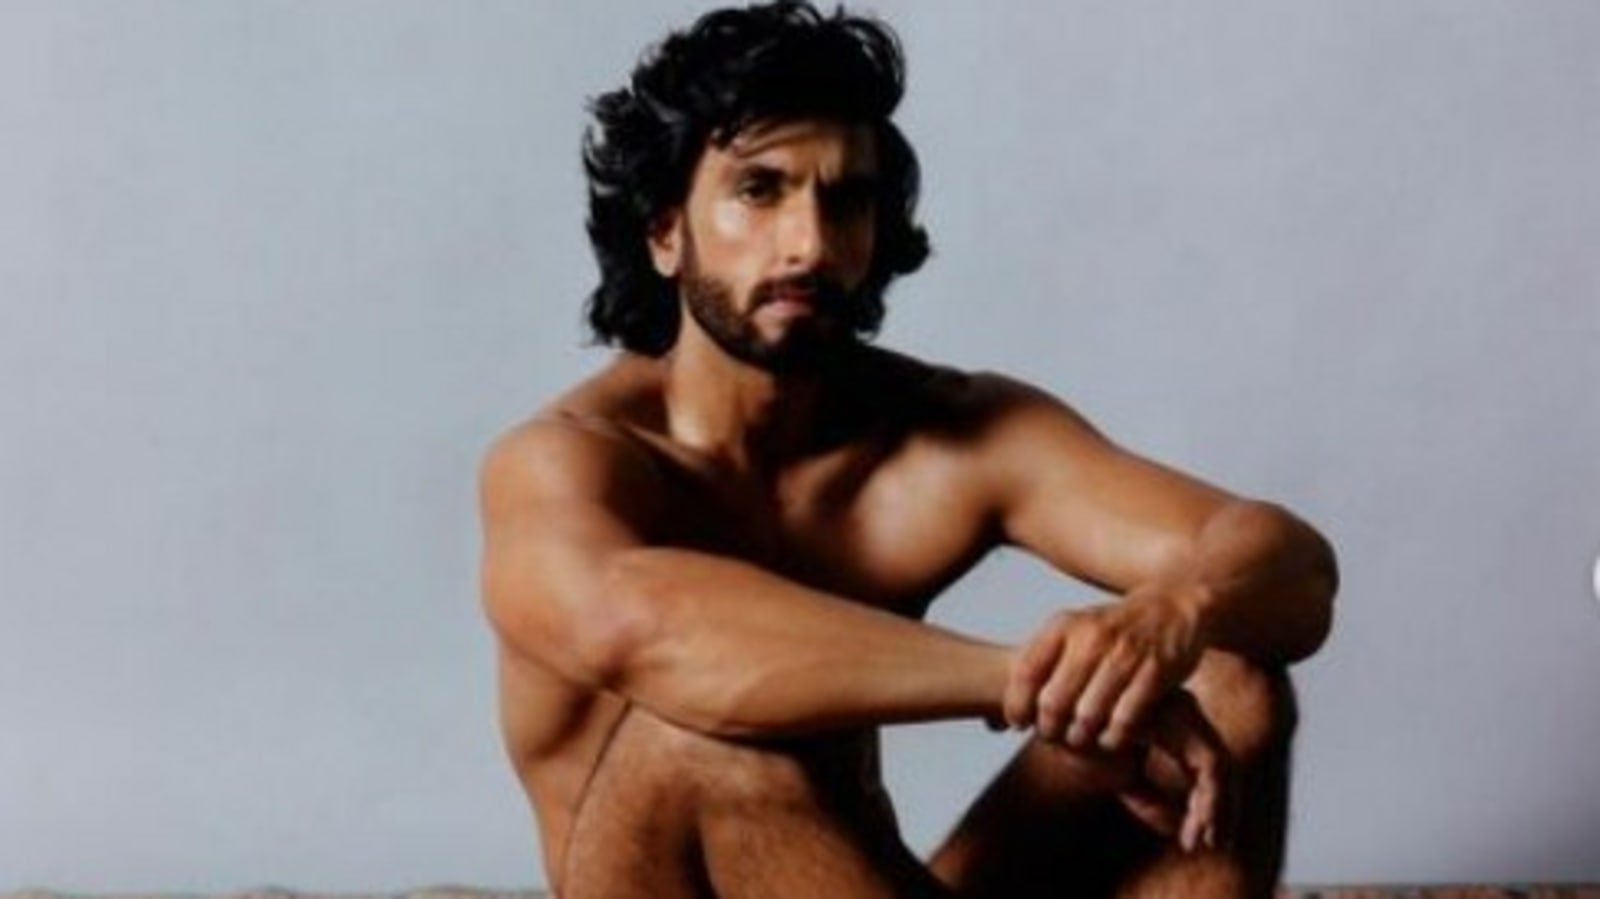 Masaba Gupta calls Ranveer Singh's nude shoot 'best cover shot' India has  seen | Bollywood - Hindustan Times